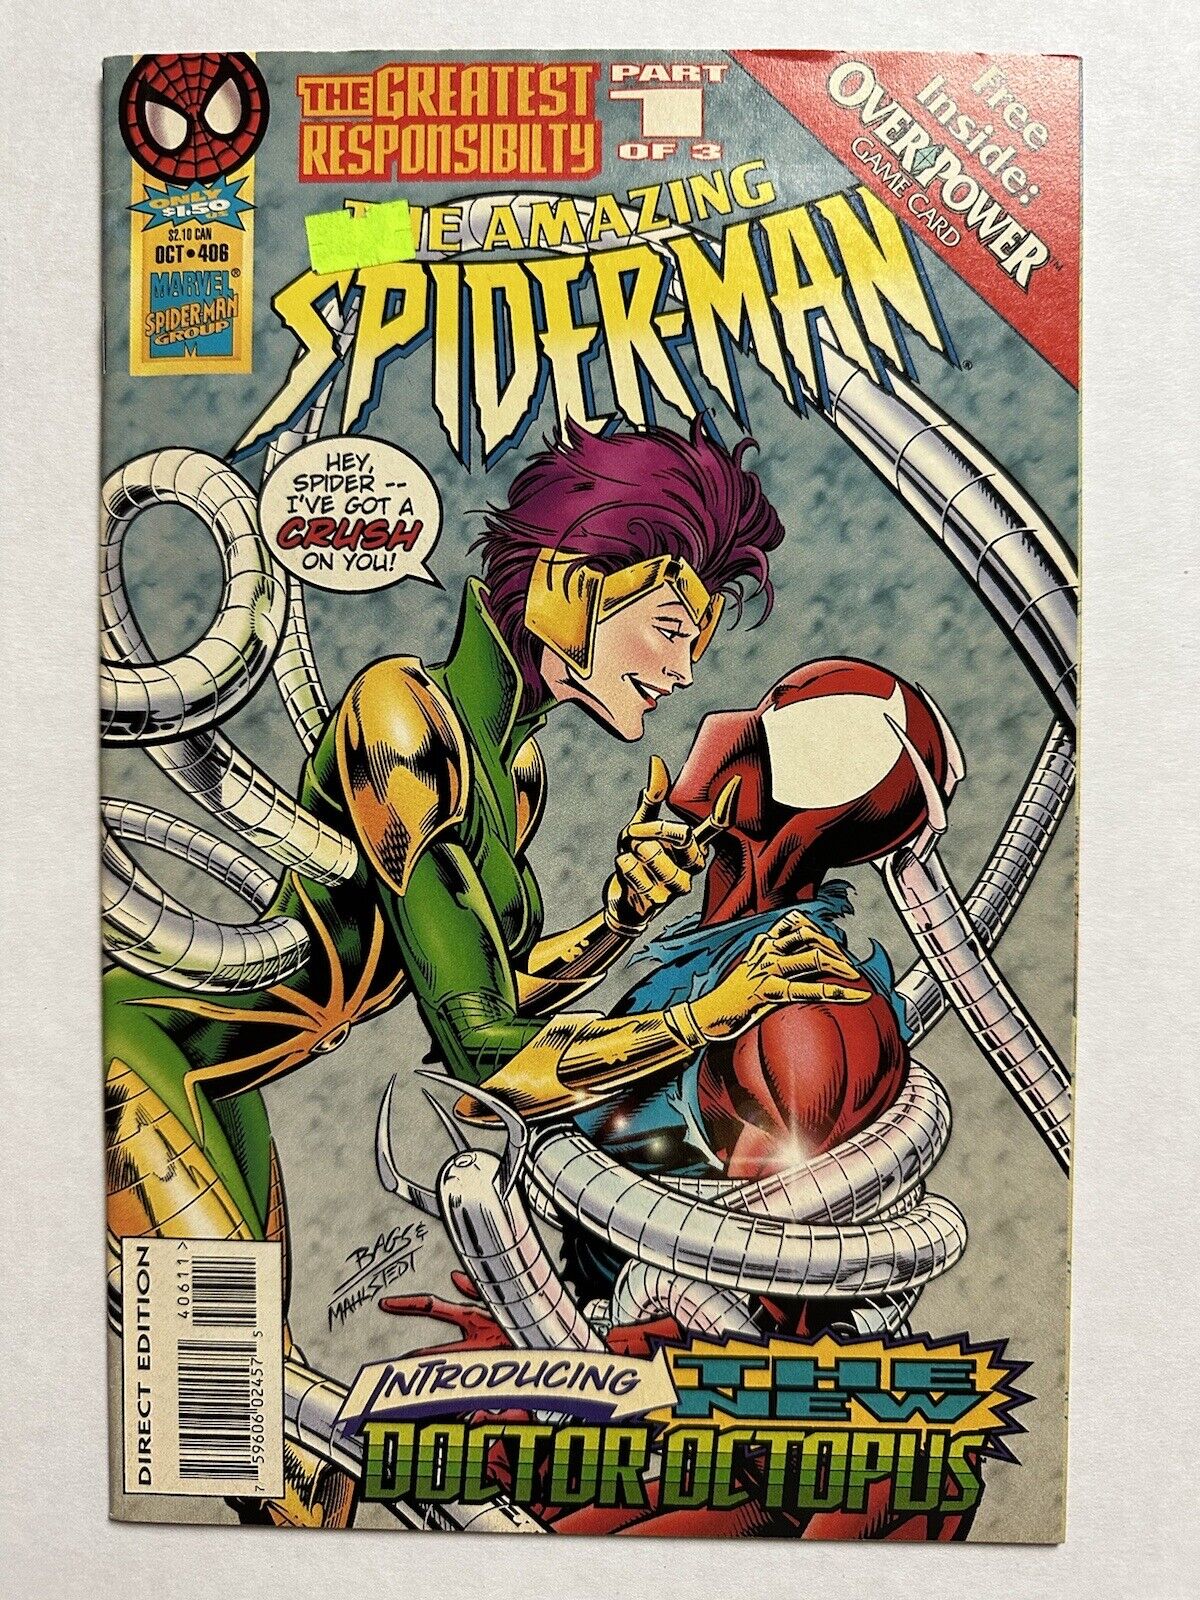 The Amazing Spider-Man #406 (Marvel Comics October 1995)